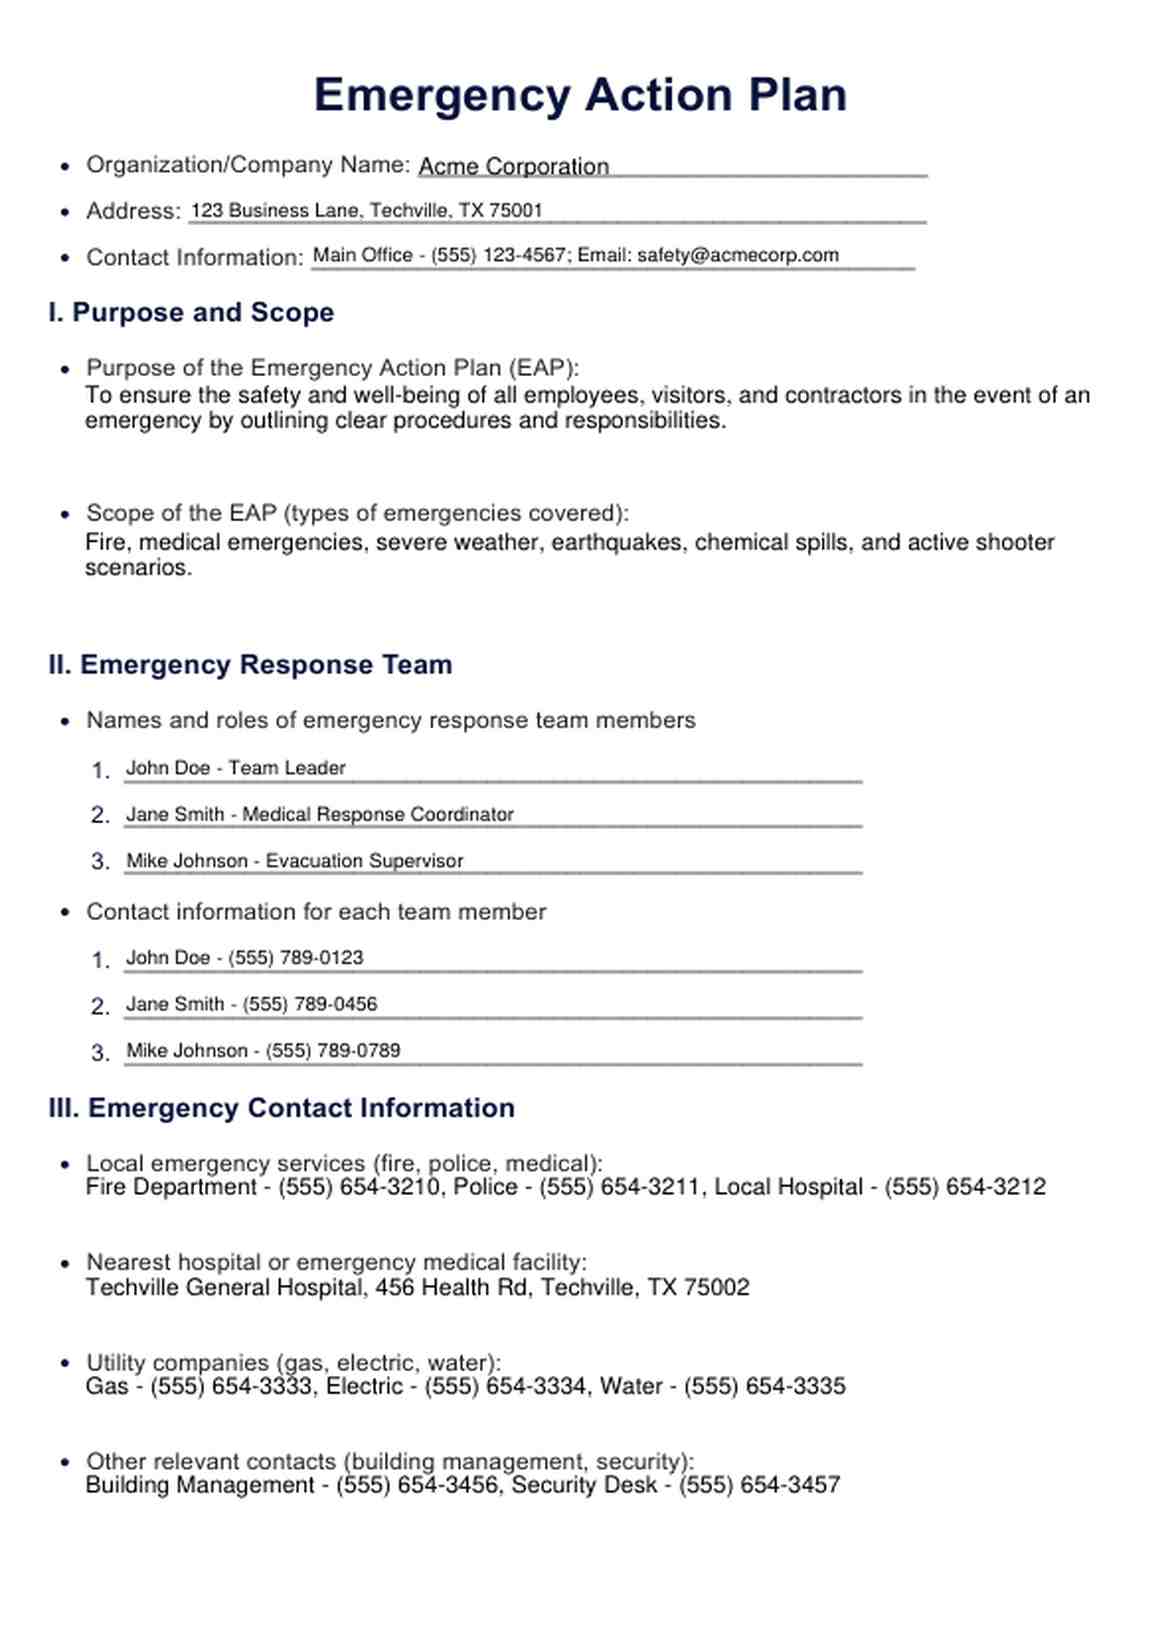 Plan de Acción de Emergencia PDF Example